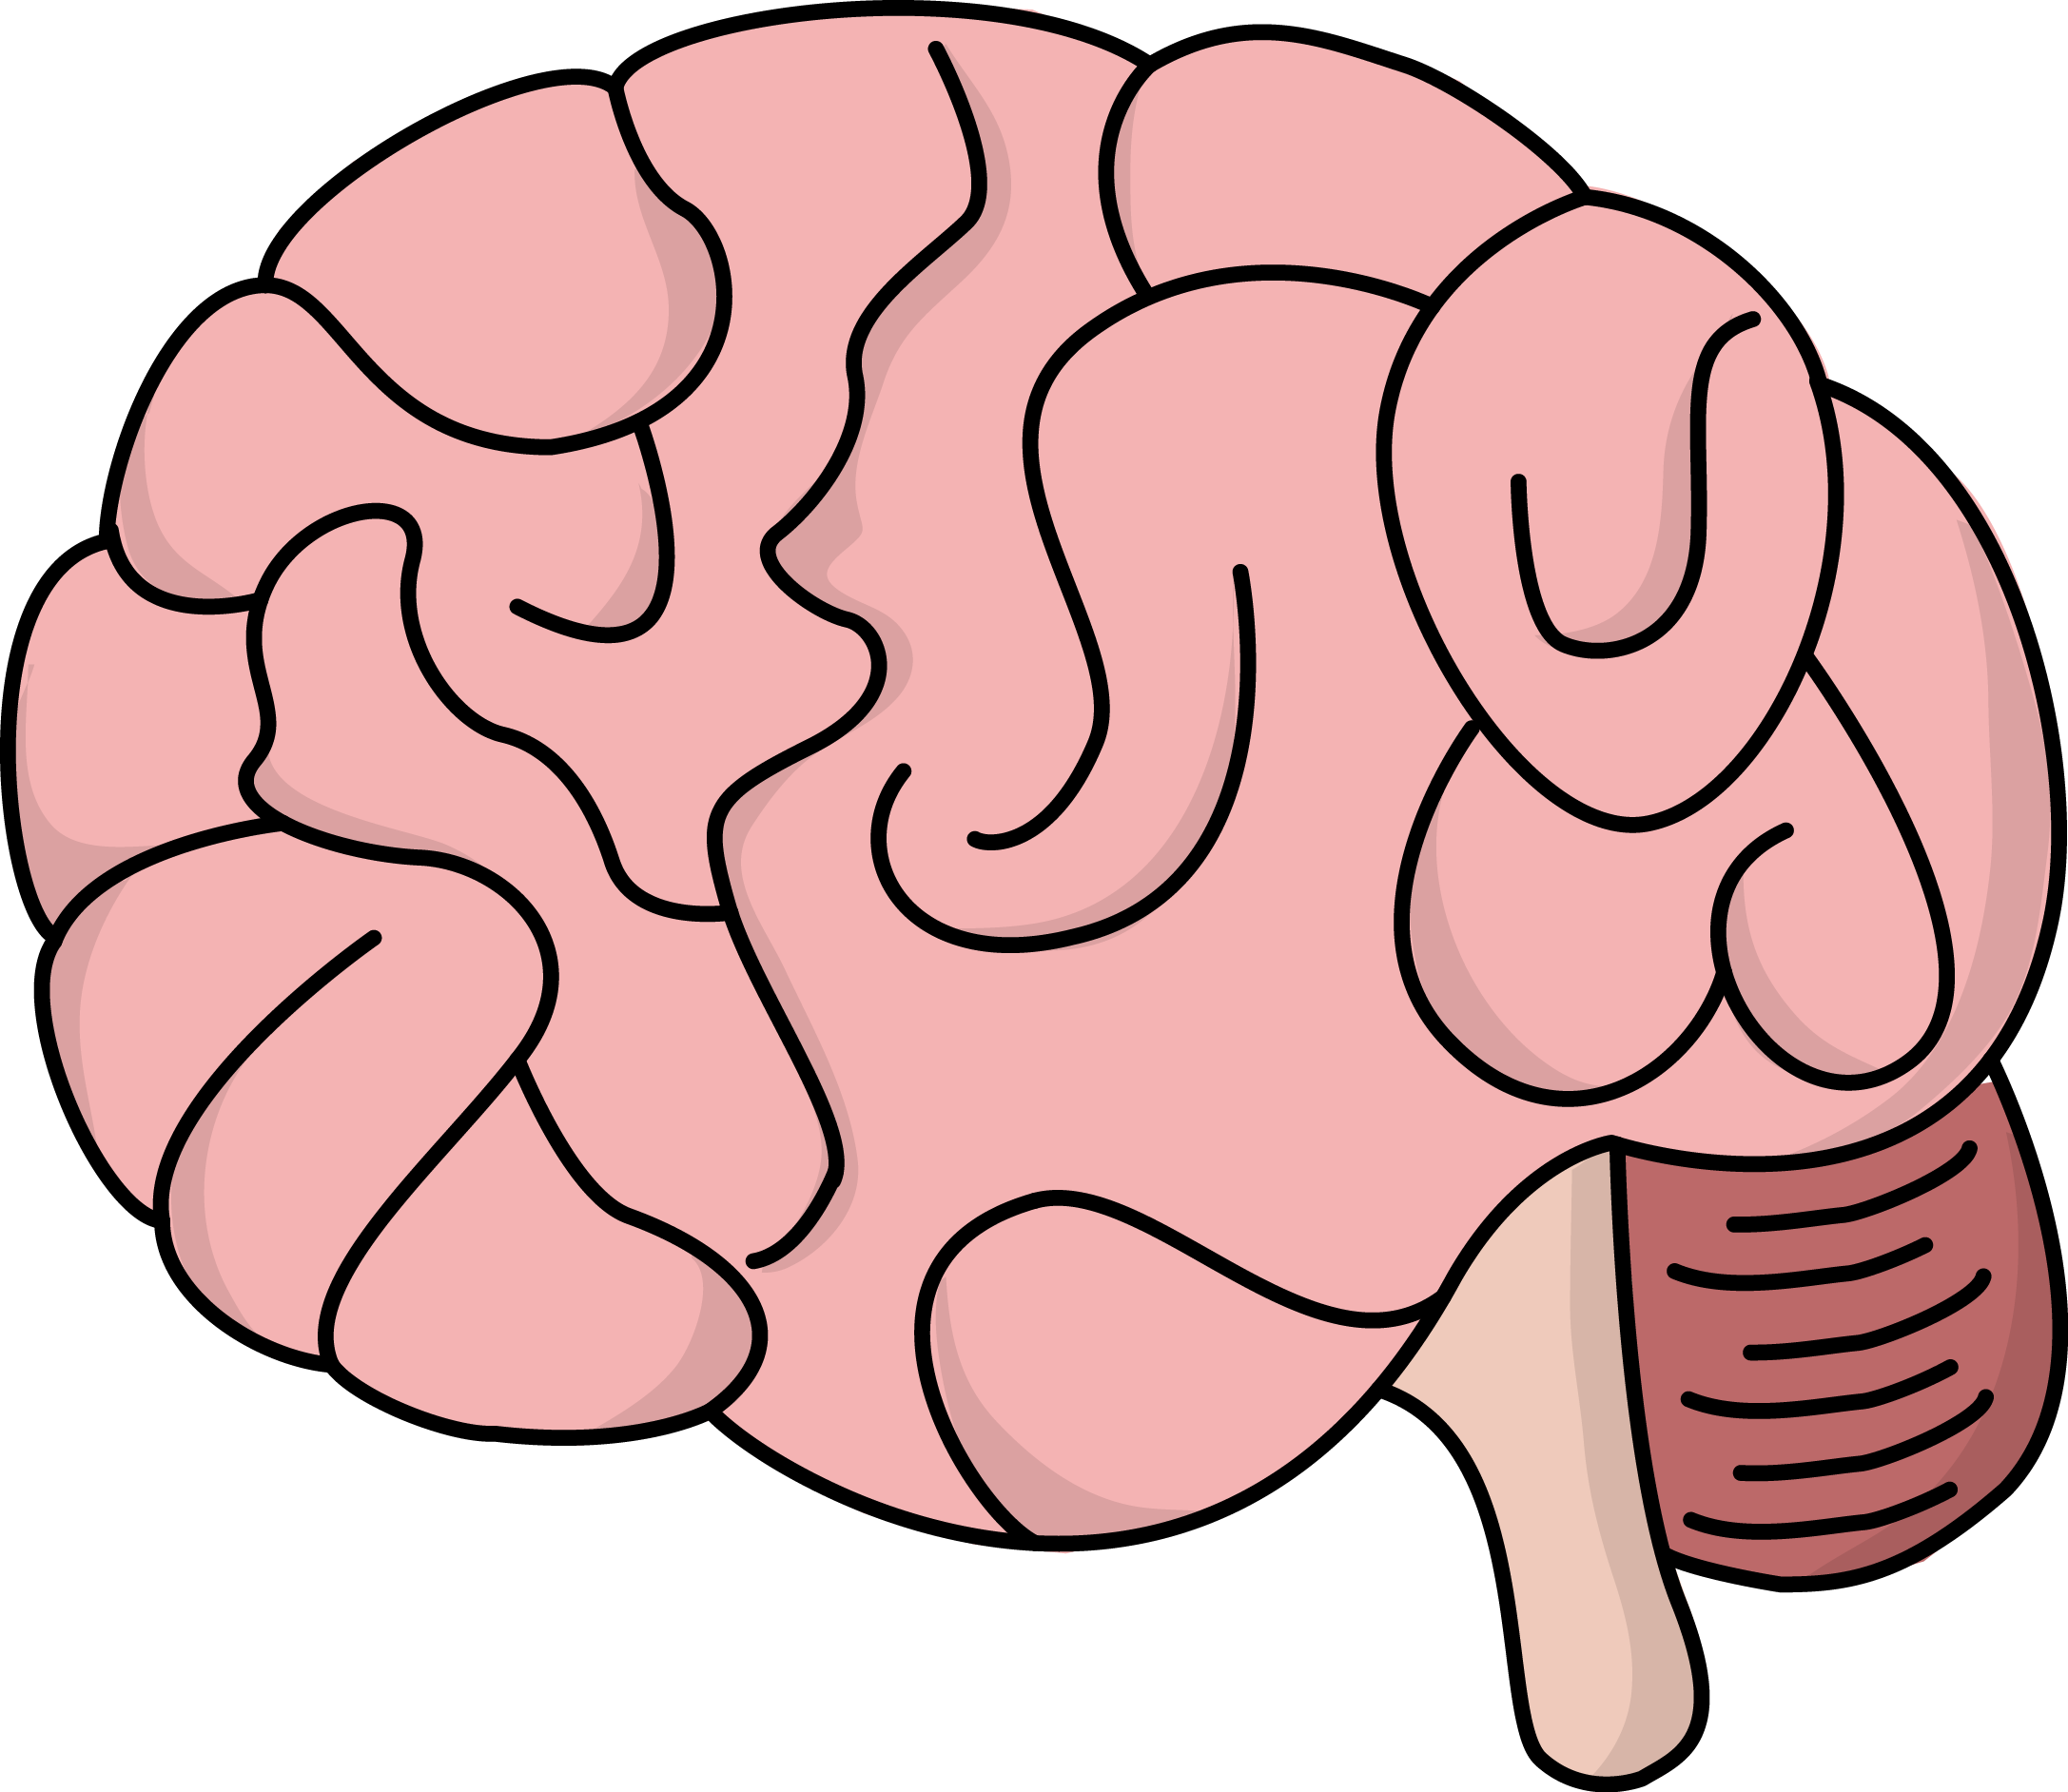 free download brain illustration